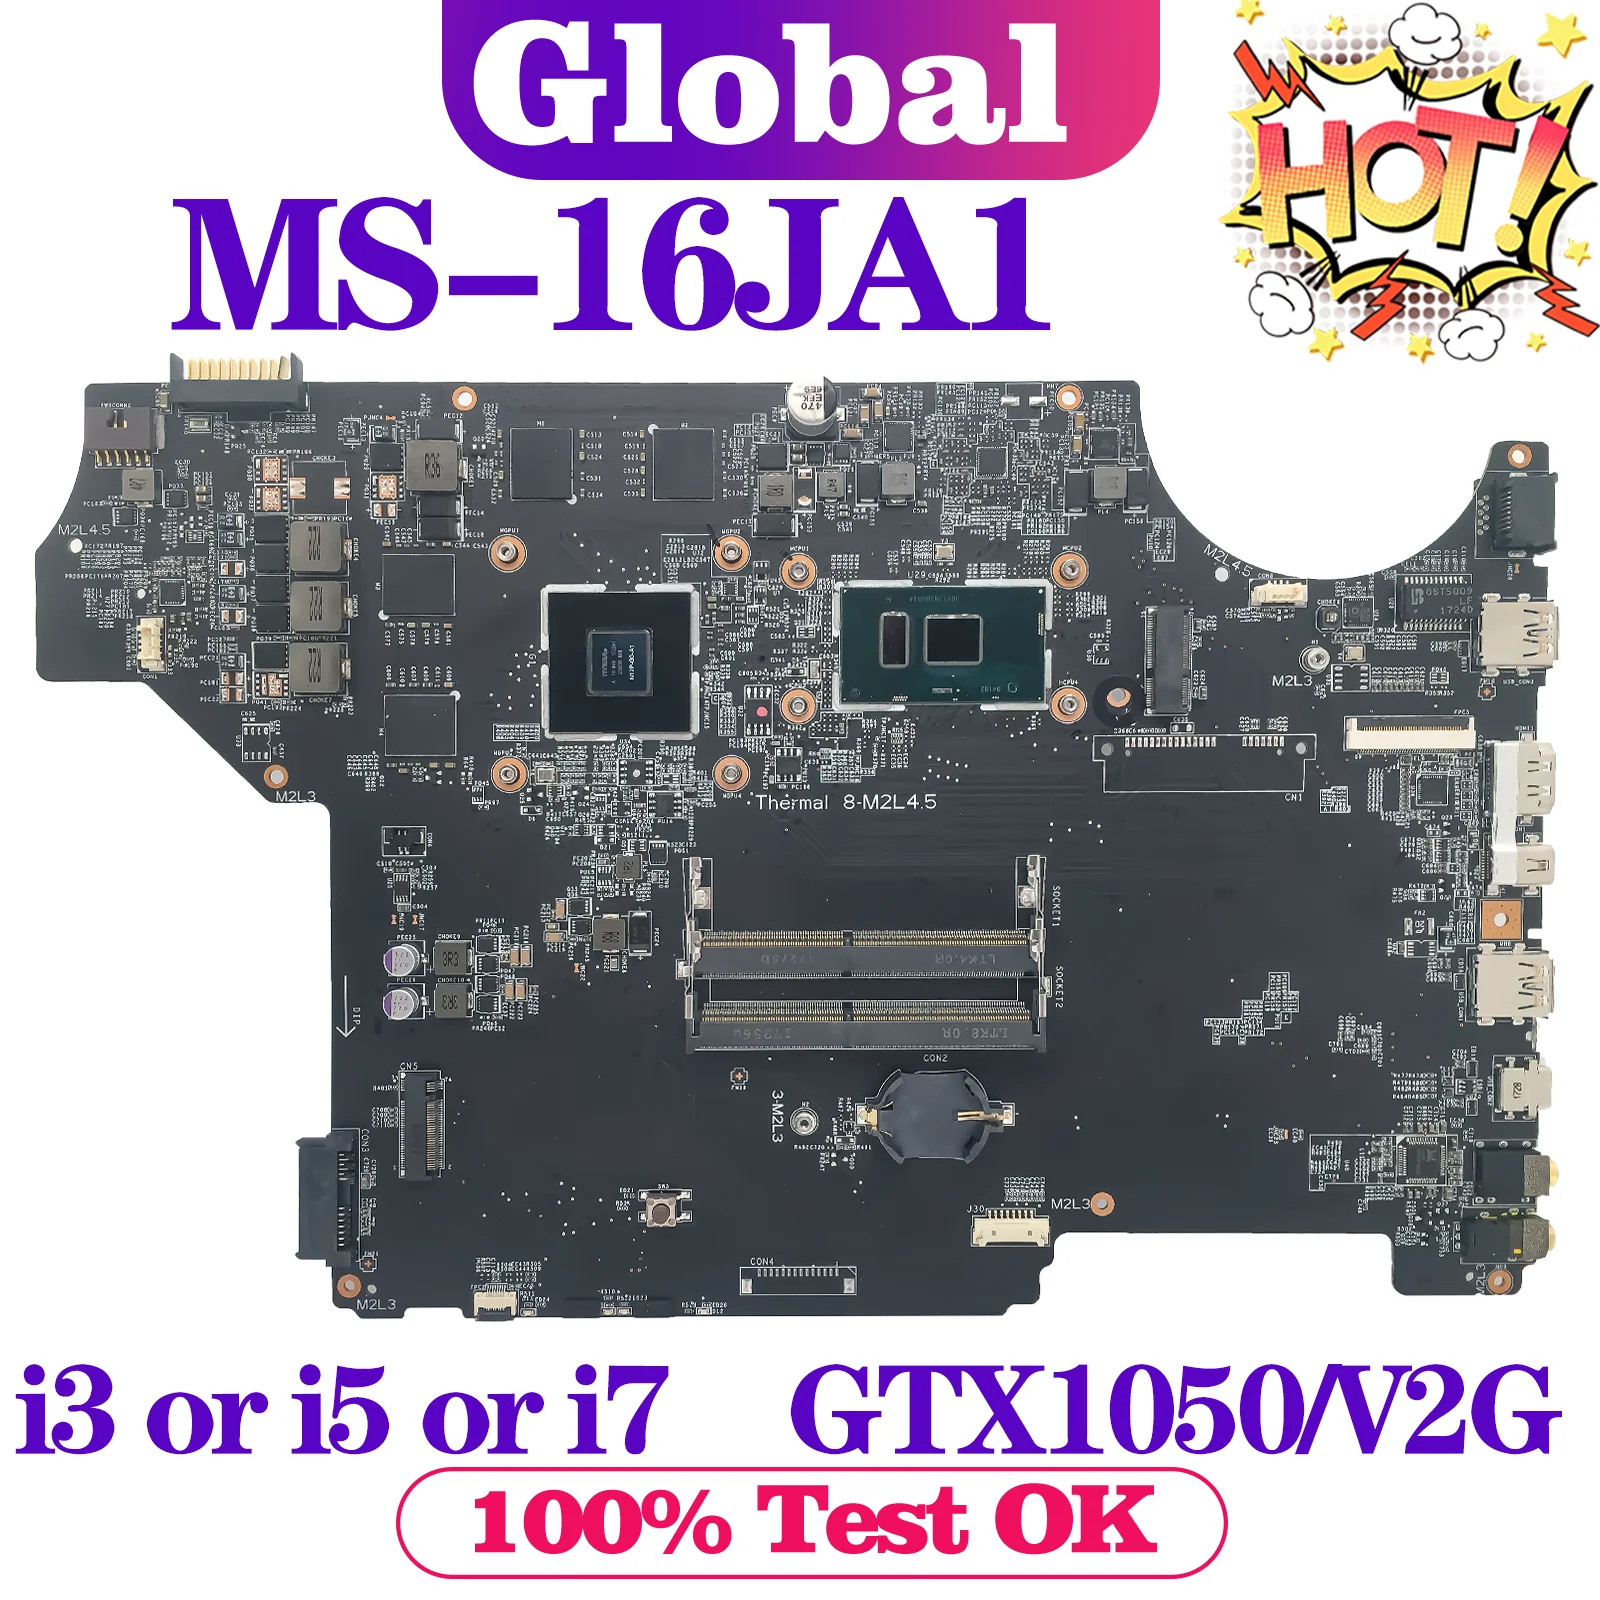 

KEFU Mainboard For MSI MS-16JA1 MS-16JA Laptop Motherboard I5 I7 7th GTX1050/V2G